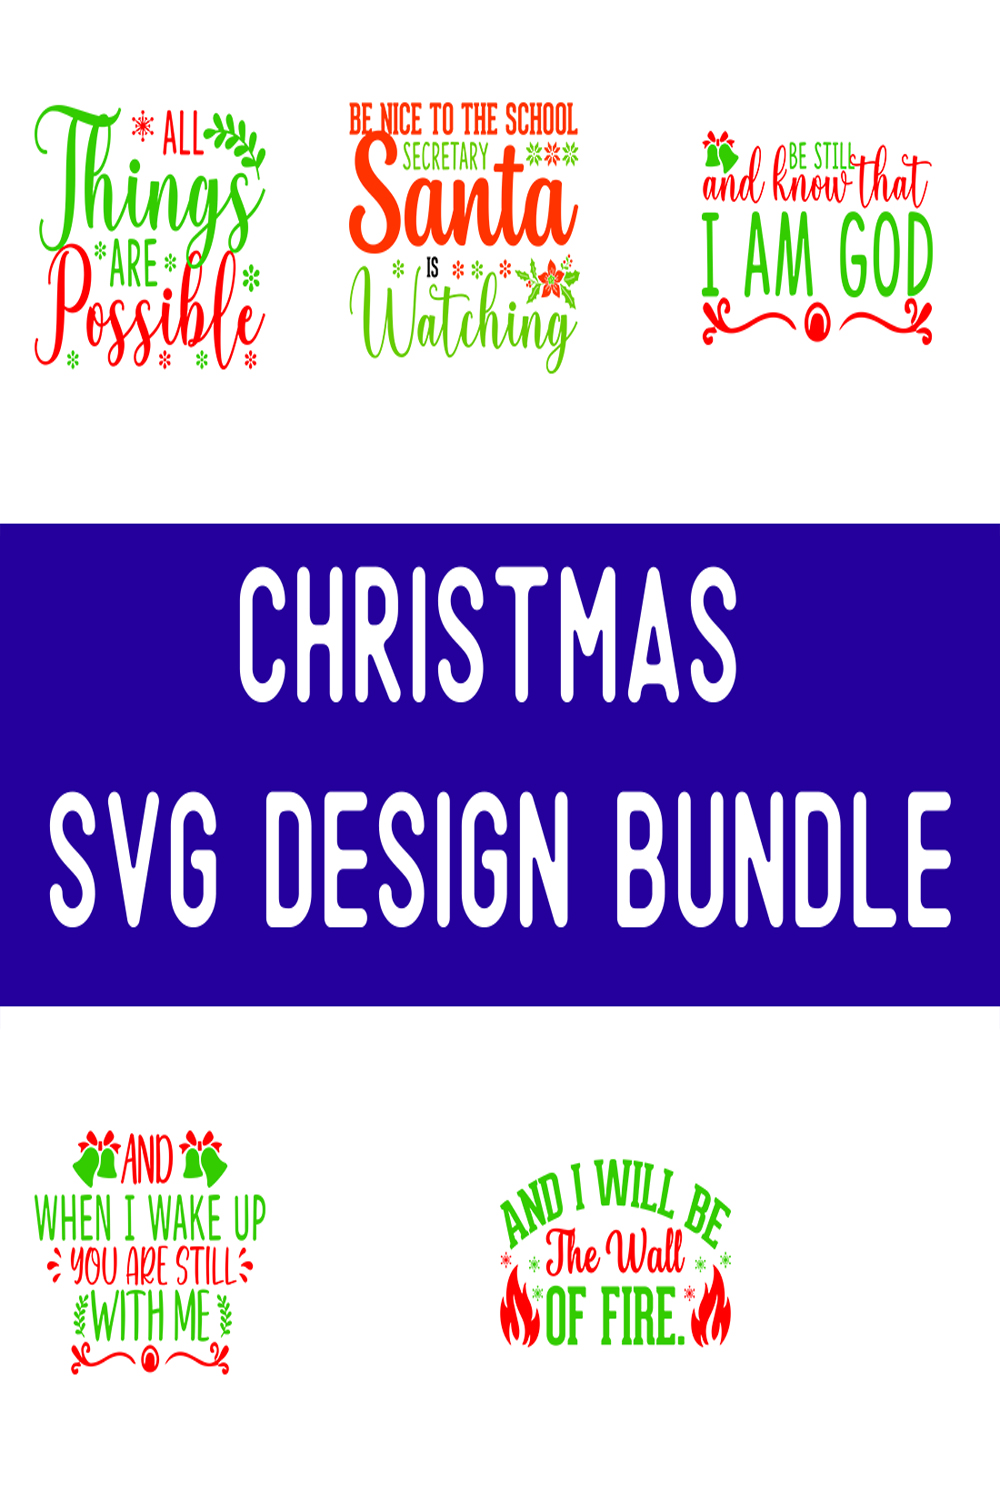 Christmas SVG Design Bundle pinterest preview image.